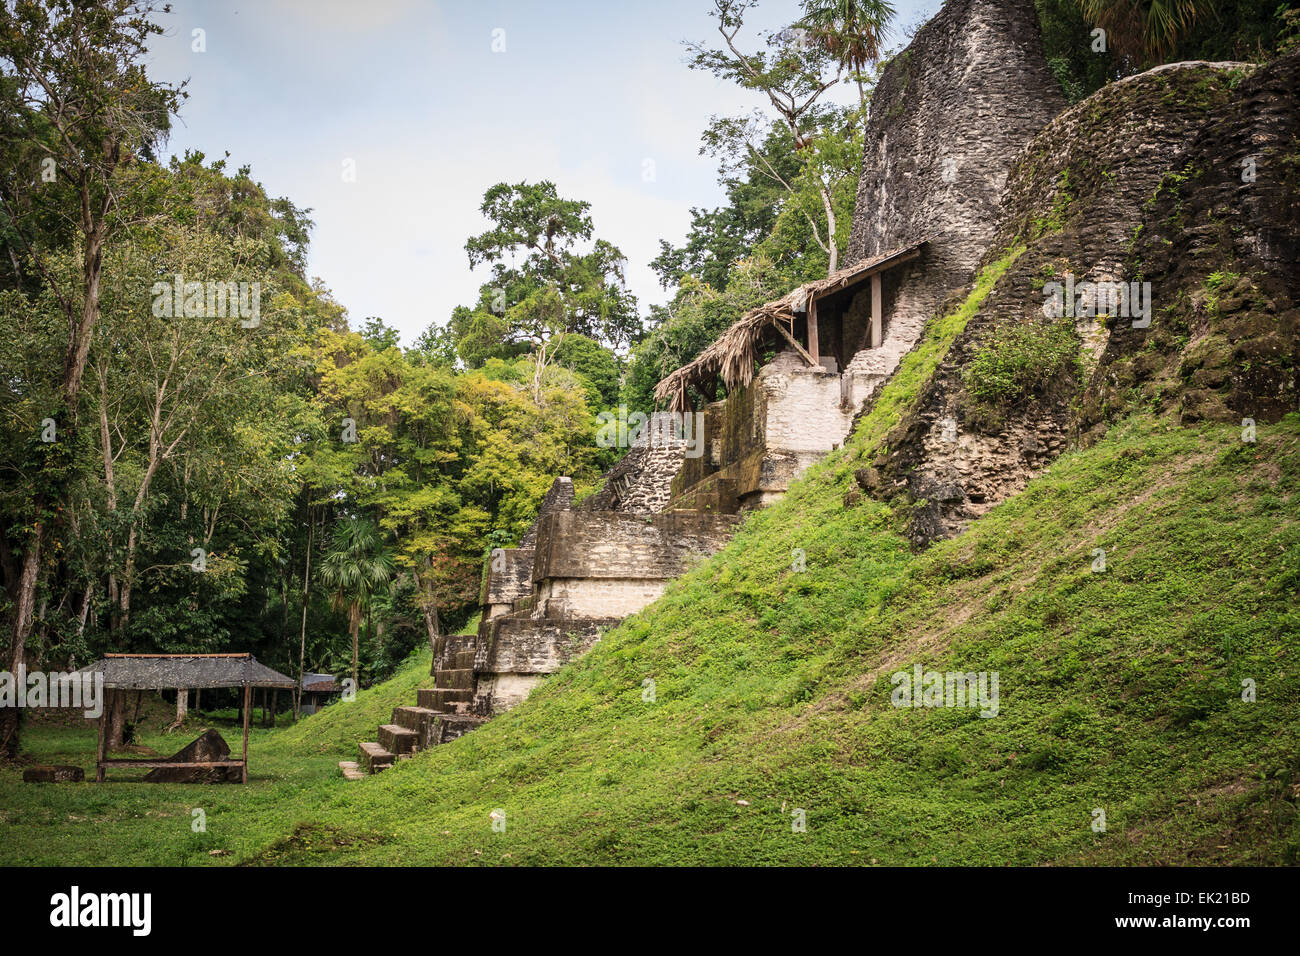 Plaza de los siete templos (Place of the seven temples), Tikal, Guatemala Stock Photo